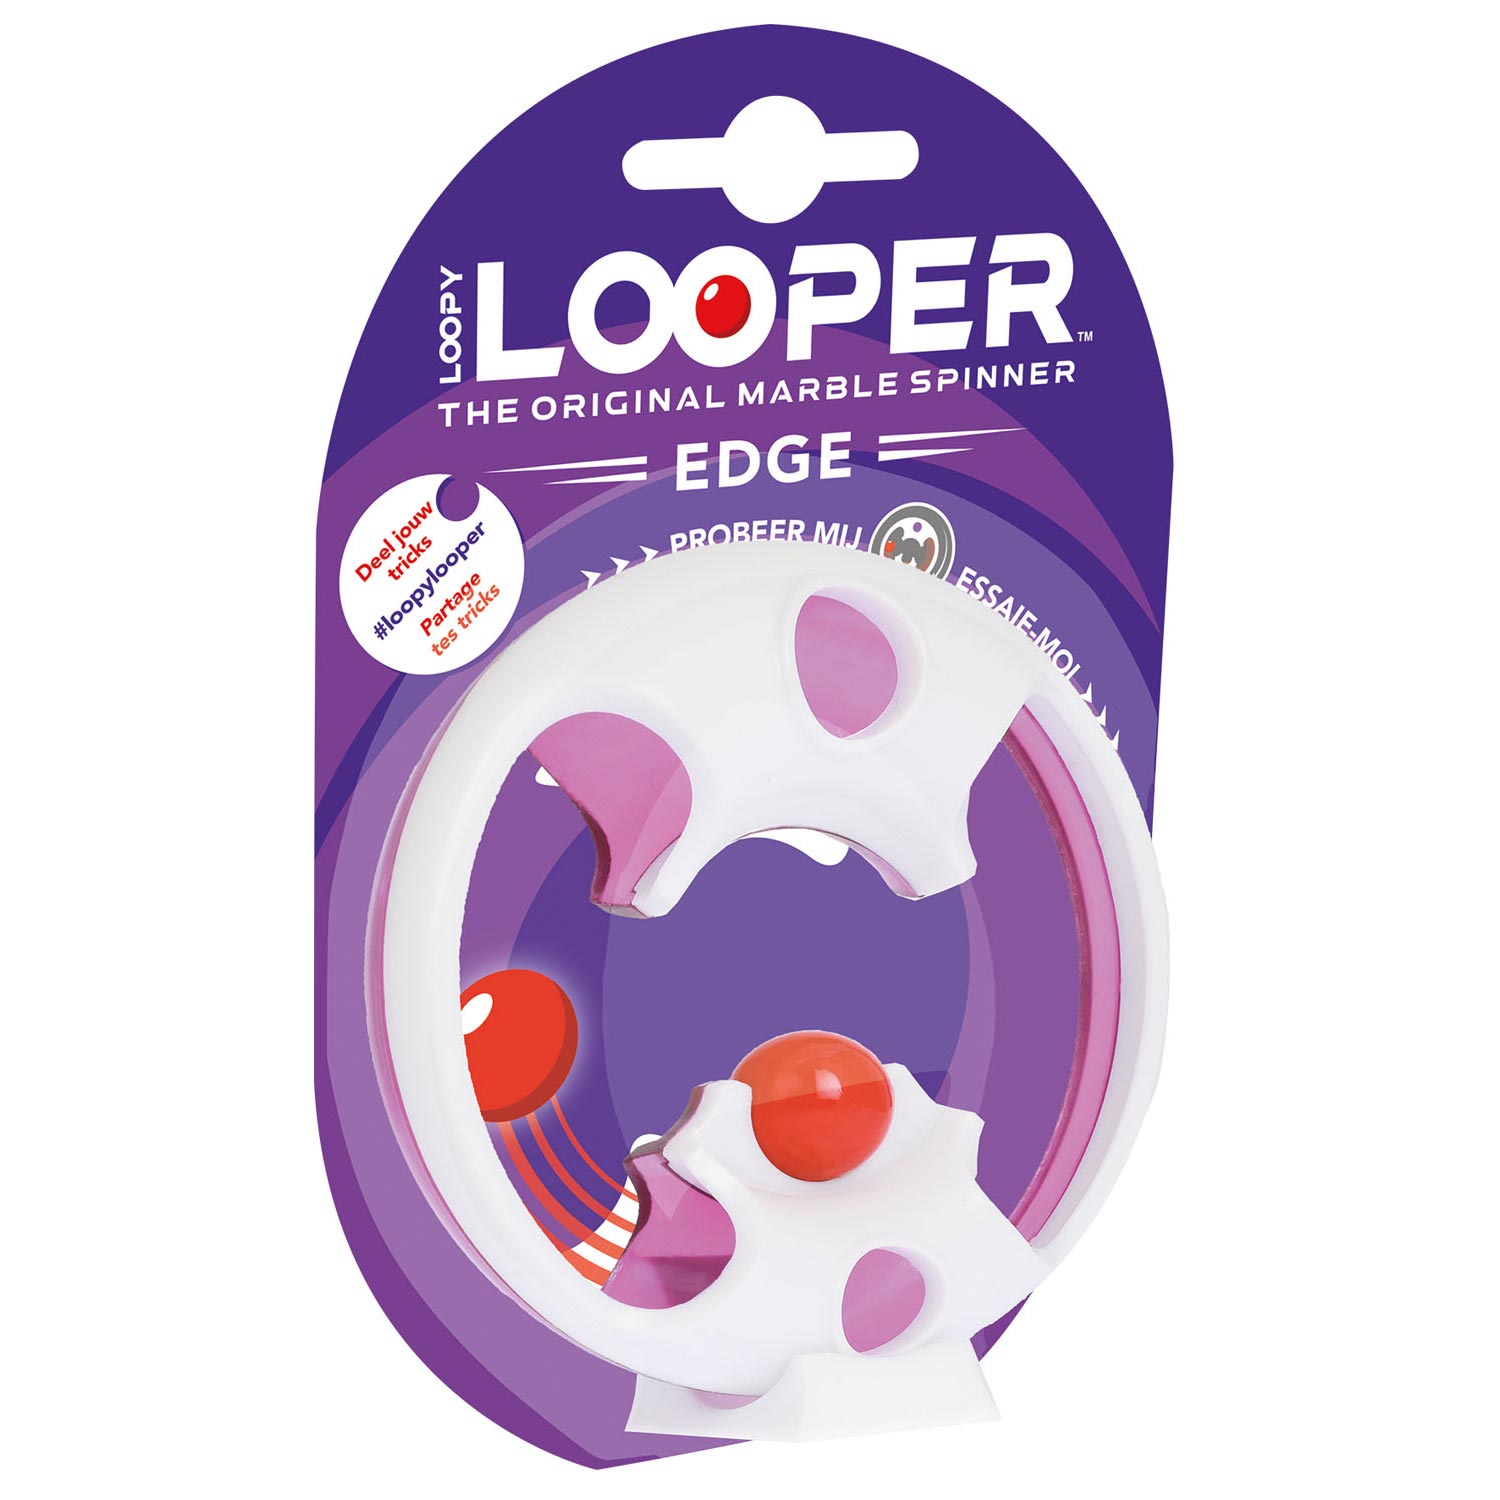 Loopy Looper Fidget Toy - Edge